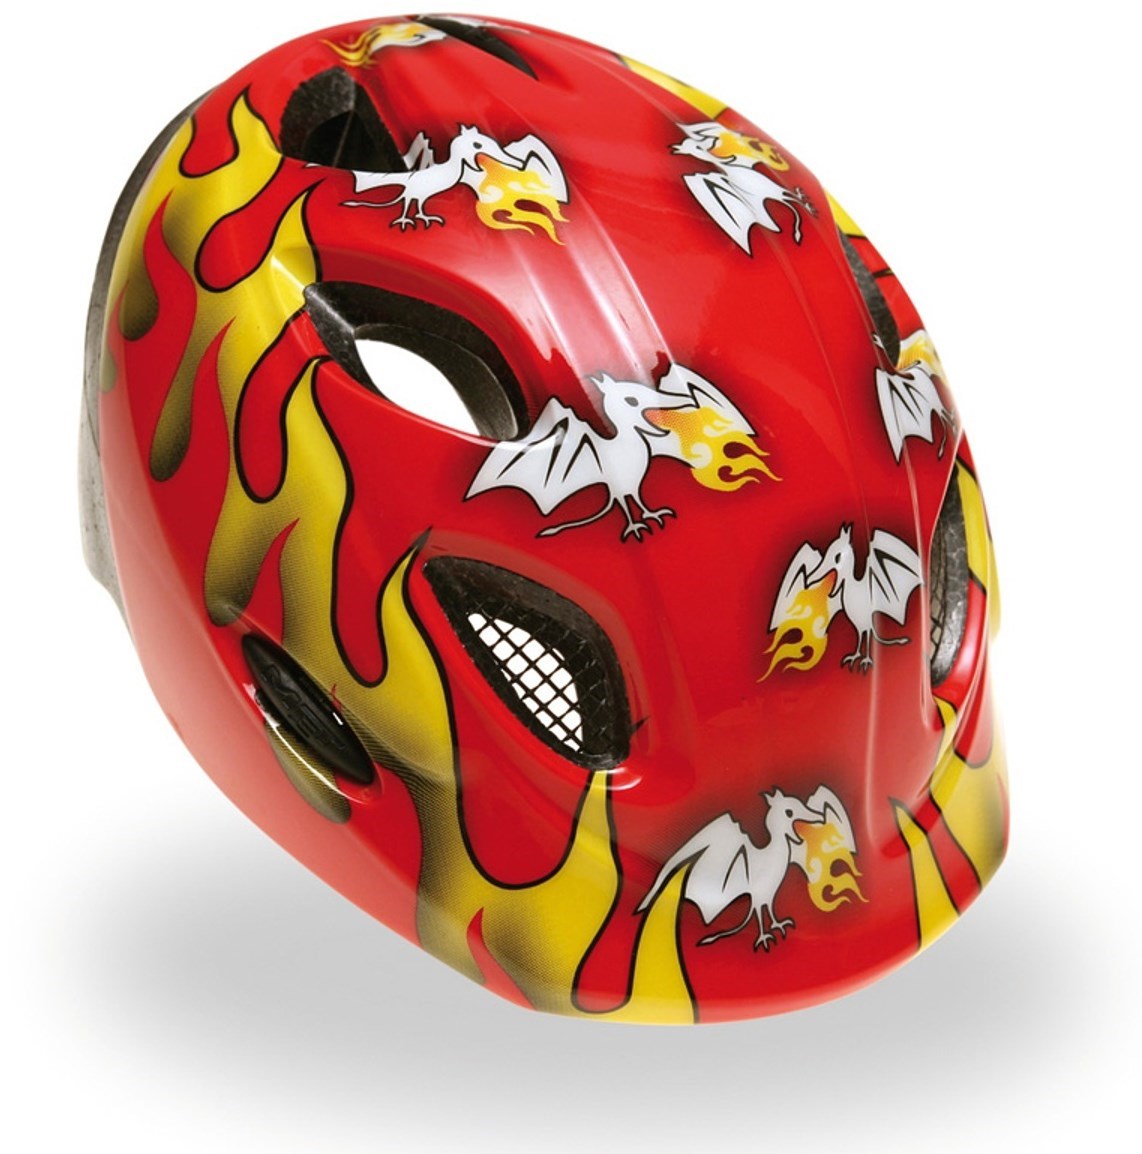 MET Elfo S Kids Helmet product image